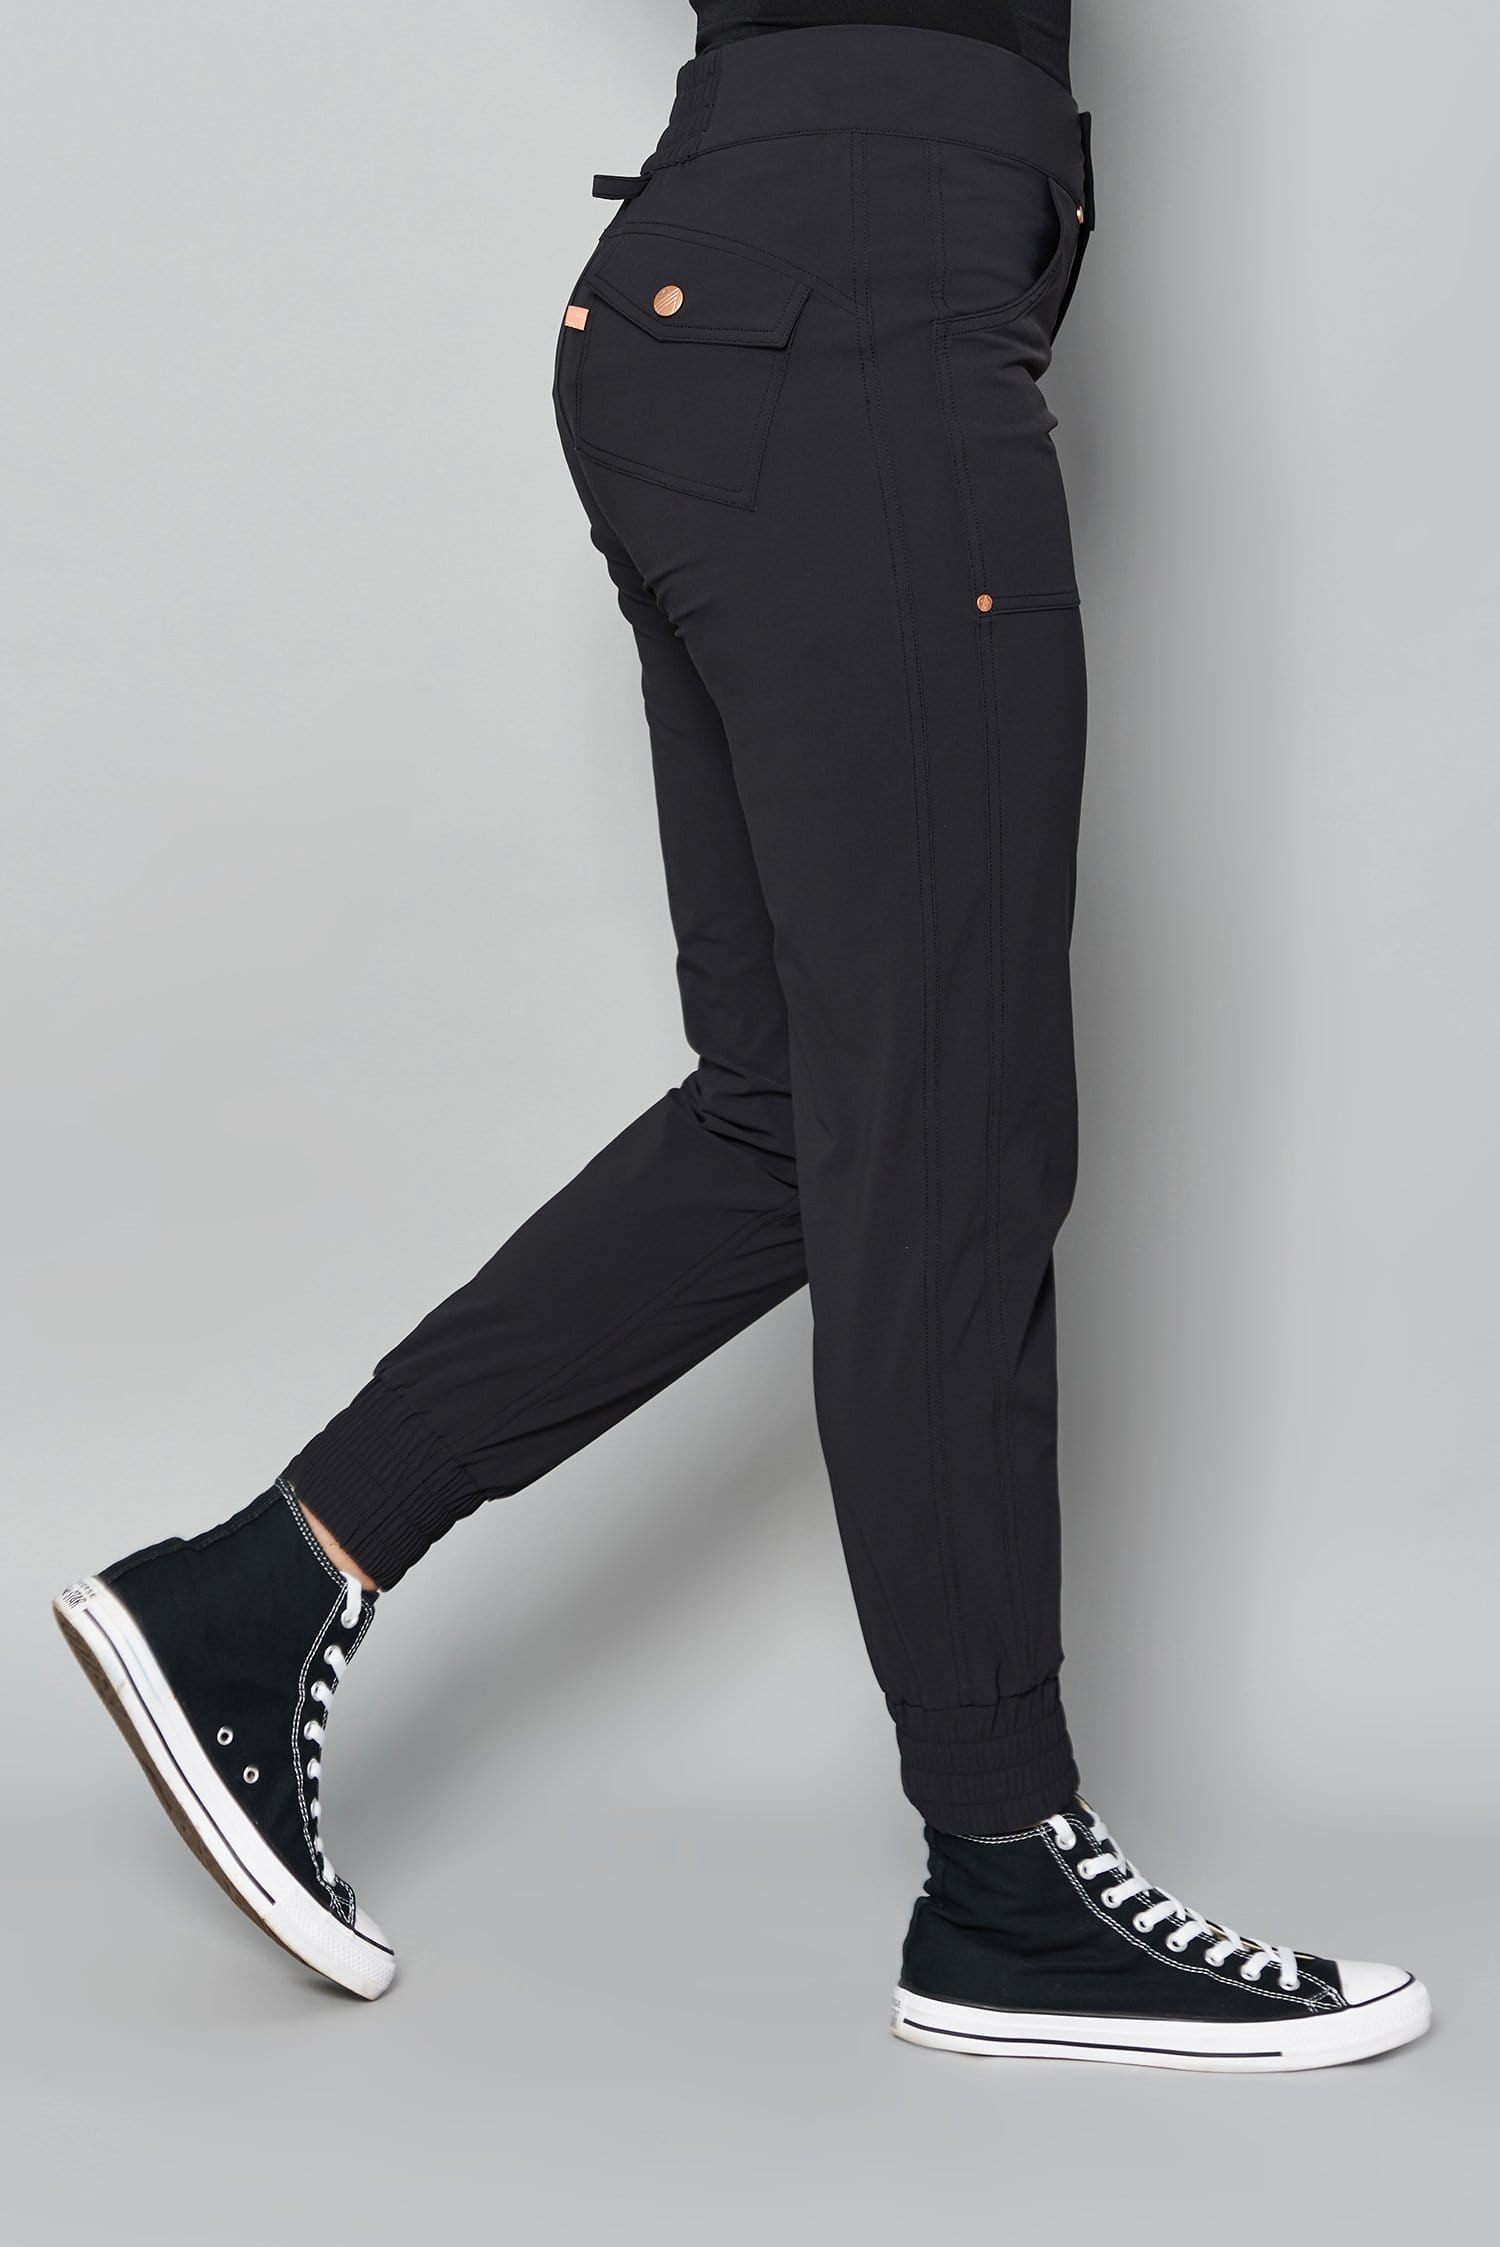 Casual Stroll Pants - Black - 38r / Uk20 - Womens - Acai Outdoorwear